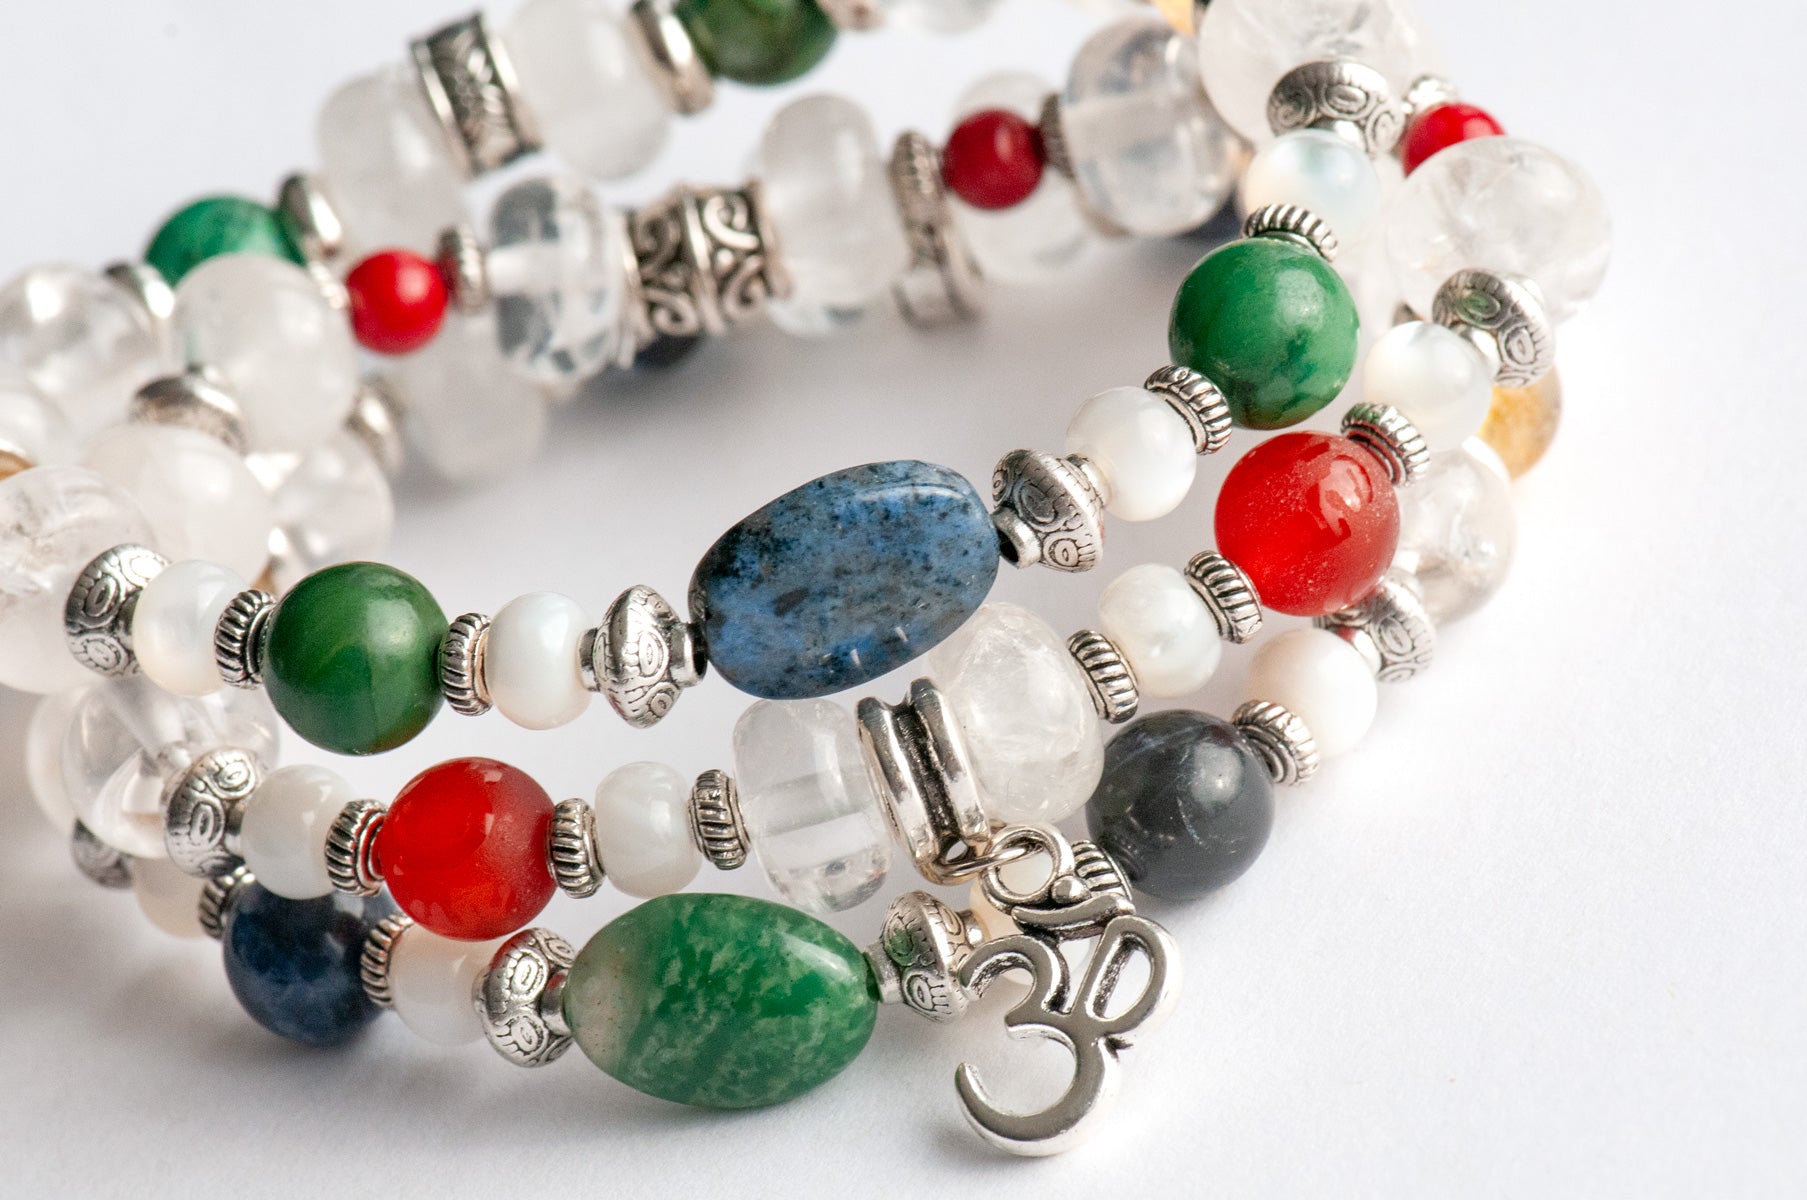 Quartz, Sodalite, Agate, Citrine, Verdite, and mother of pearl bracelet inspired by Tibet